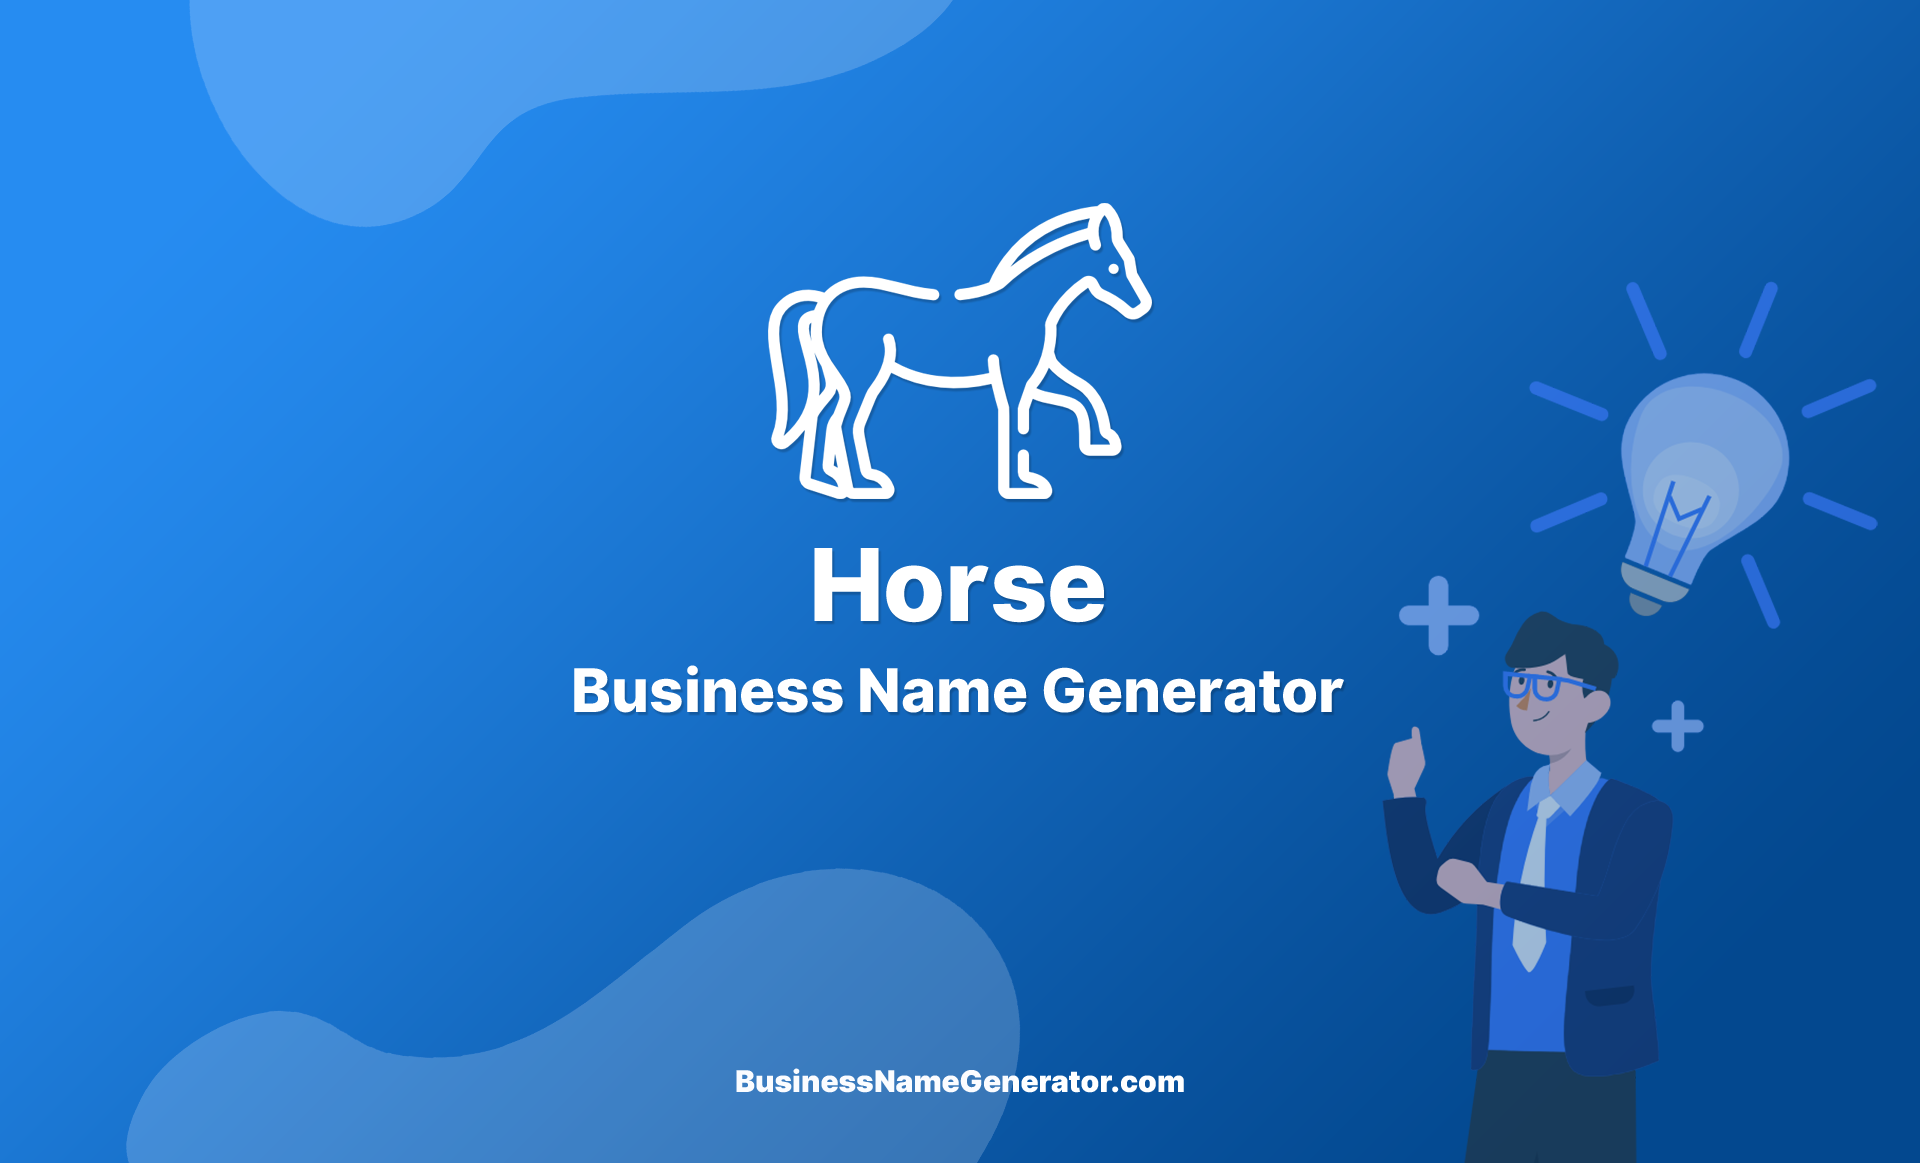 Horse Business Name Generator